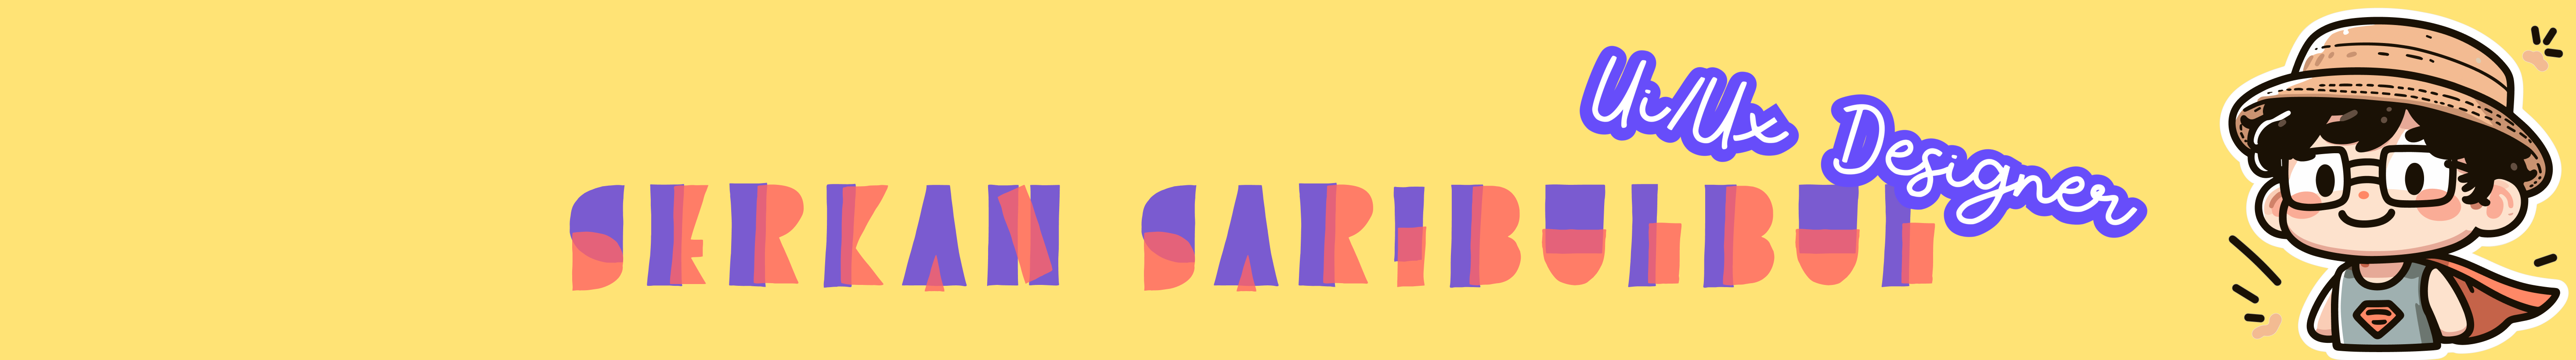 SERKAN SARIBÜLBÜL's profile banner